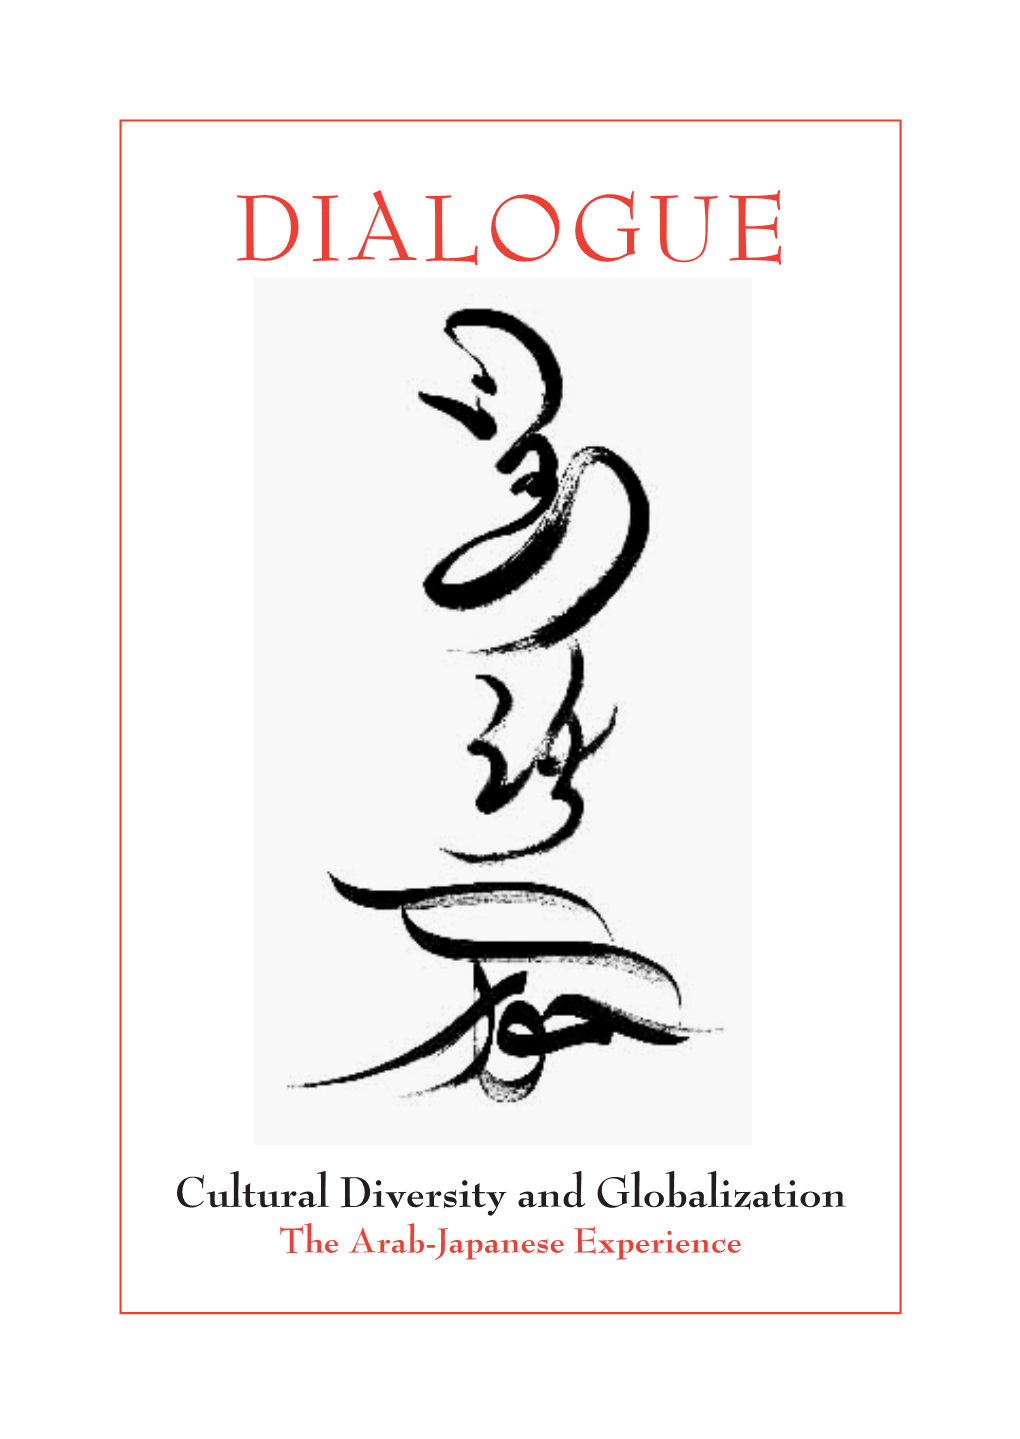 The Arab-Japanese Experience, a Cross-Regional Dialogue